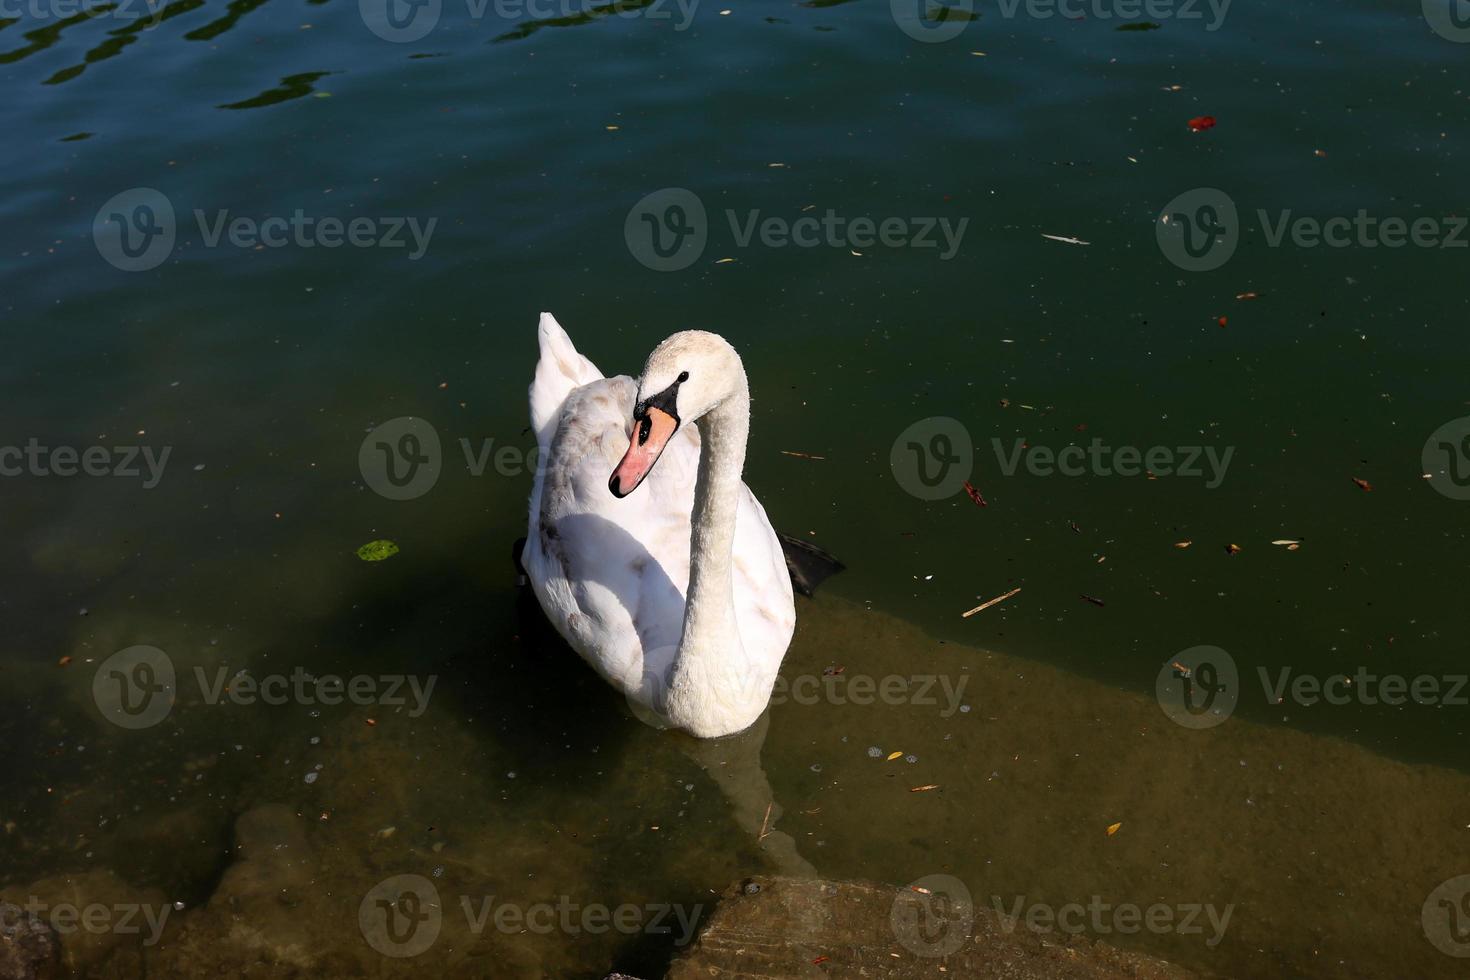 grandes cisnes blancos viven en un lago de agua dulce foto